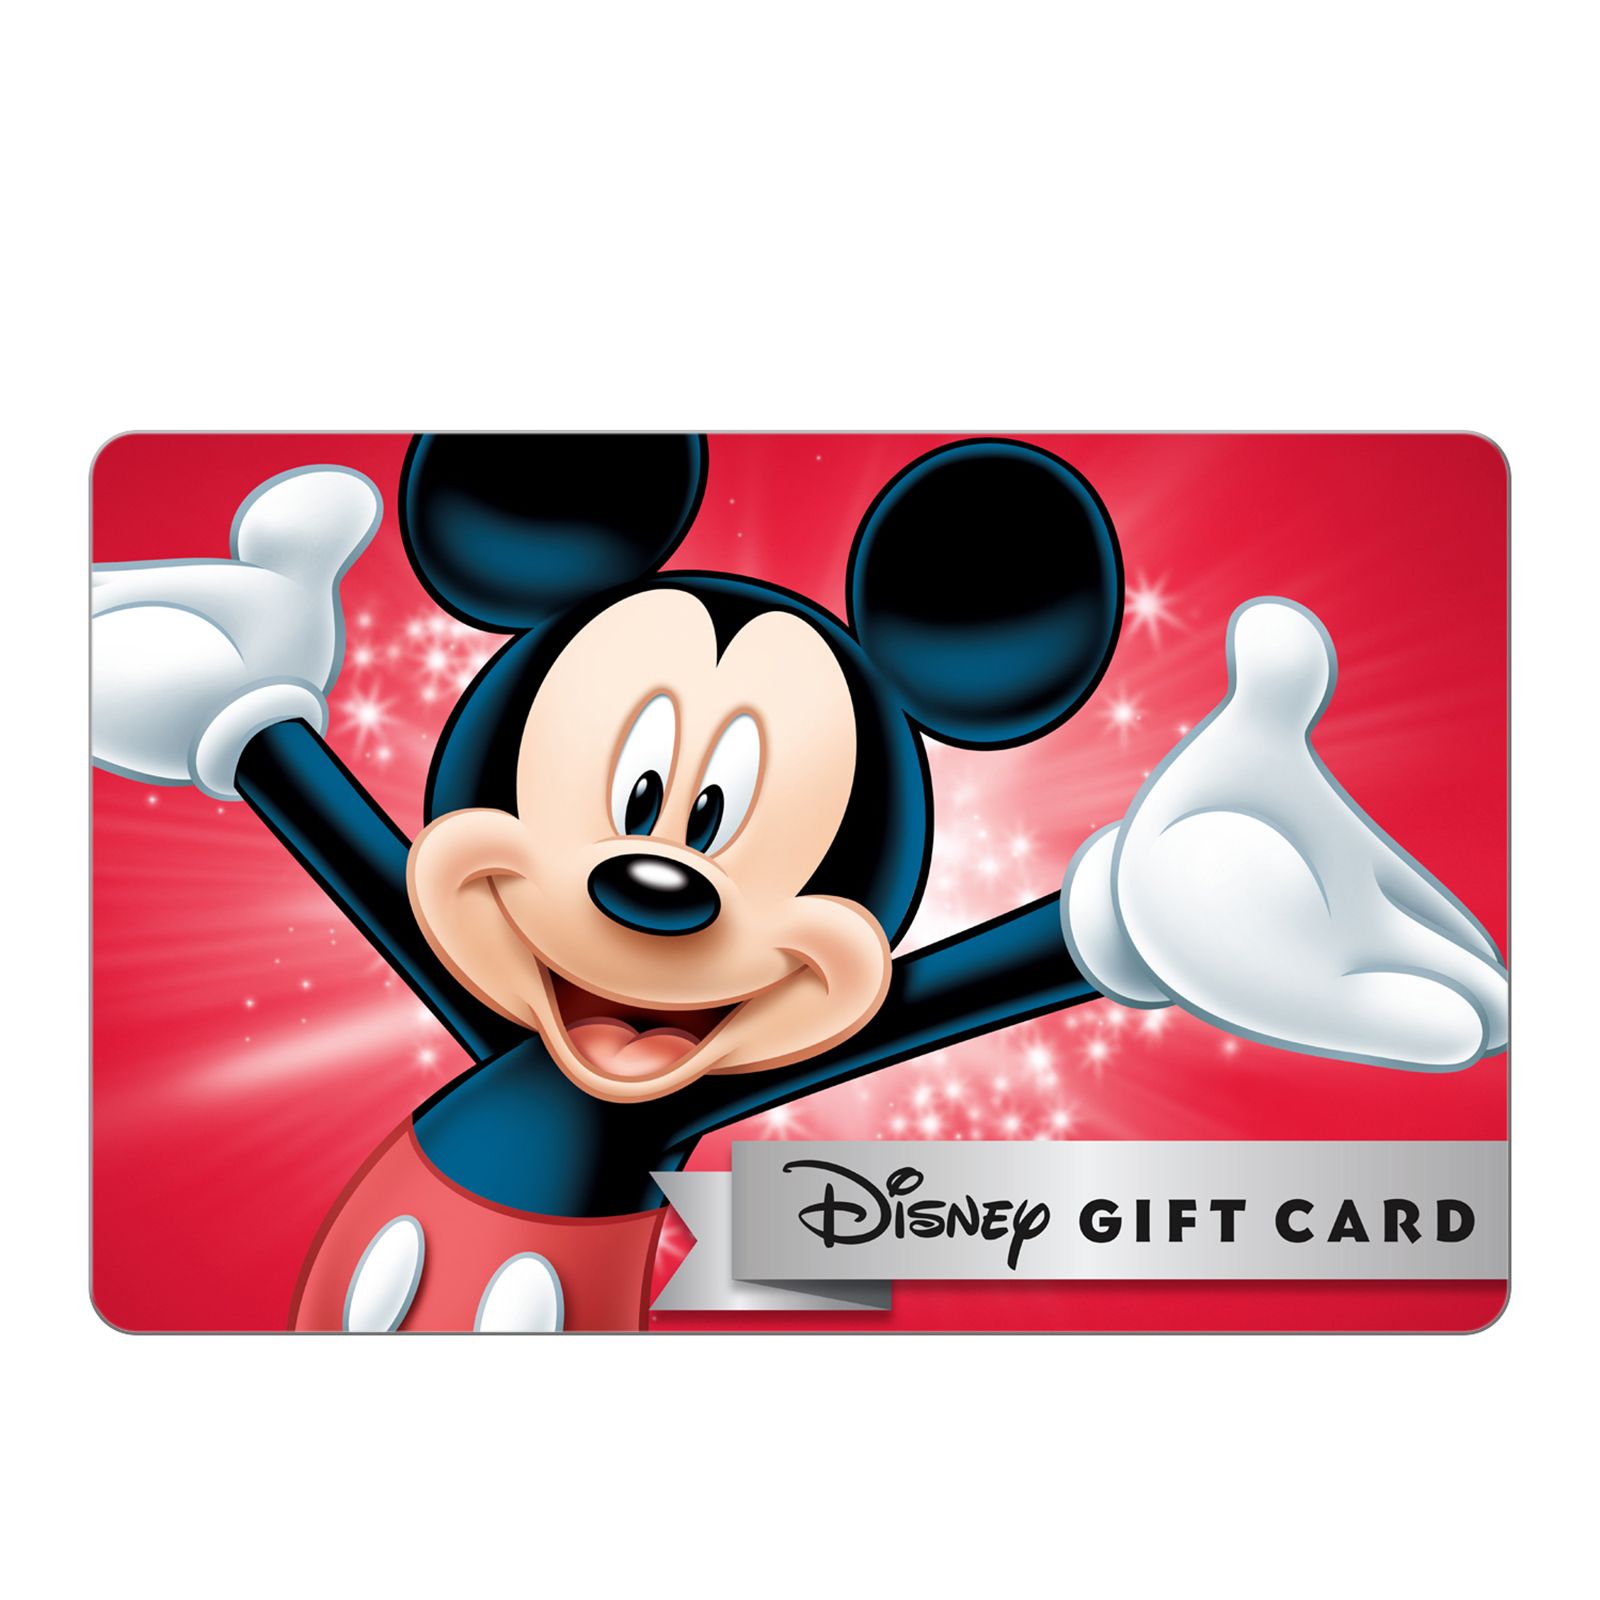 $100 Disney Gift Card - Physical